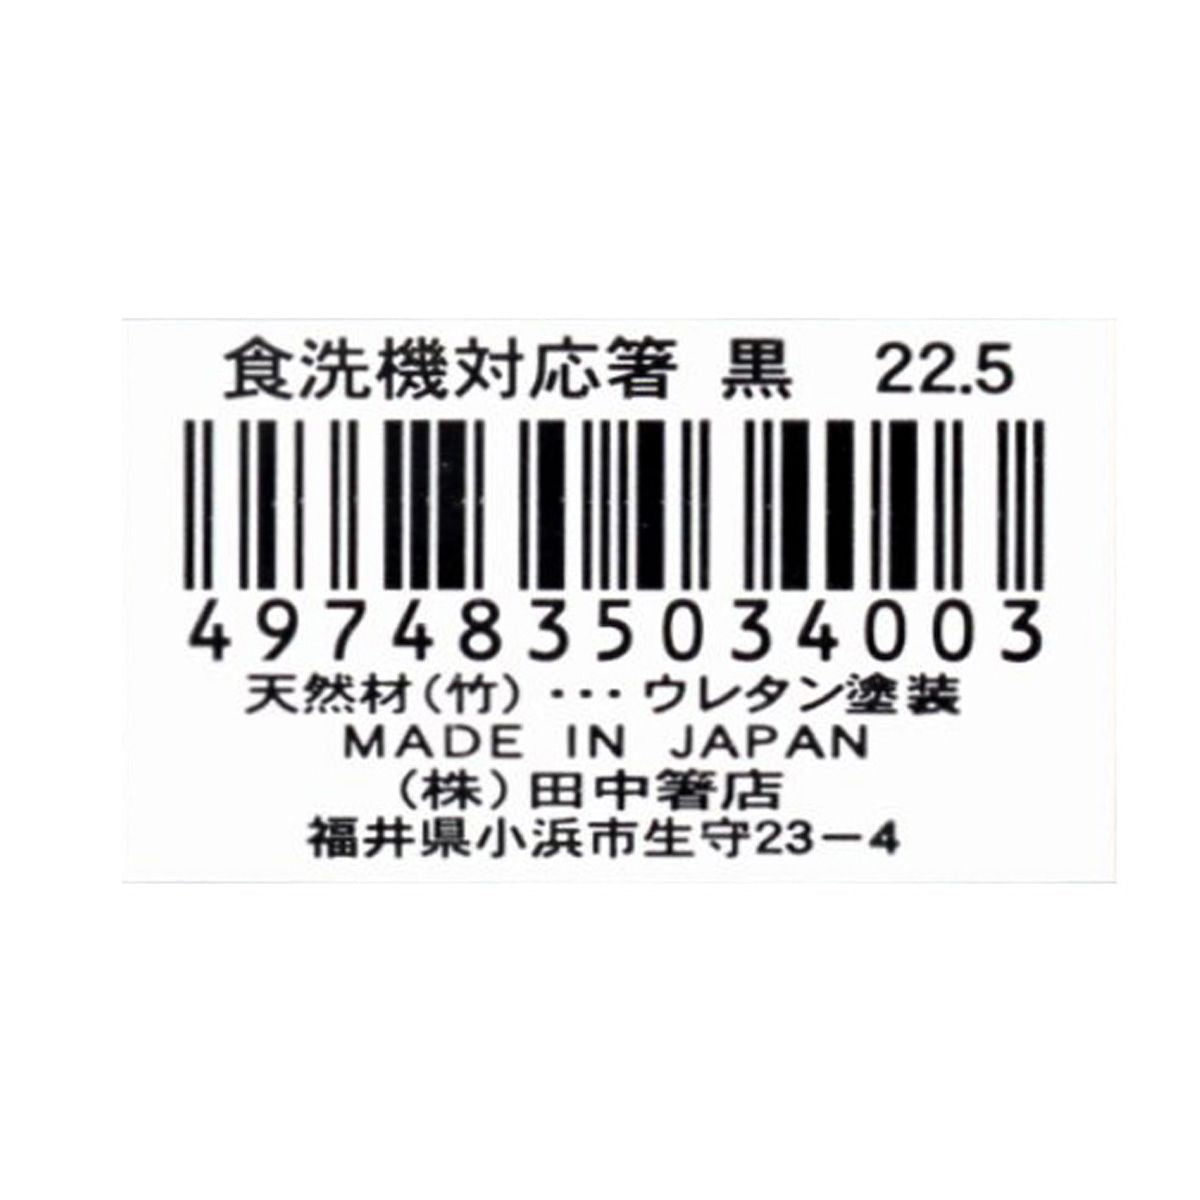 お箸 食洗機対応箸 黒 22.5cm 9001/345763